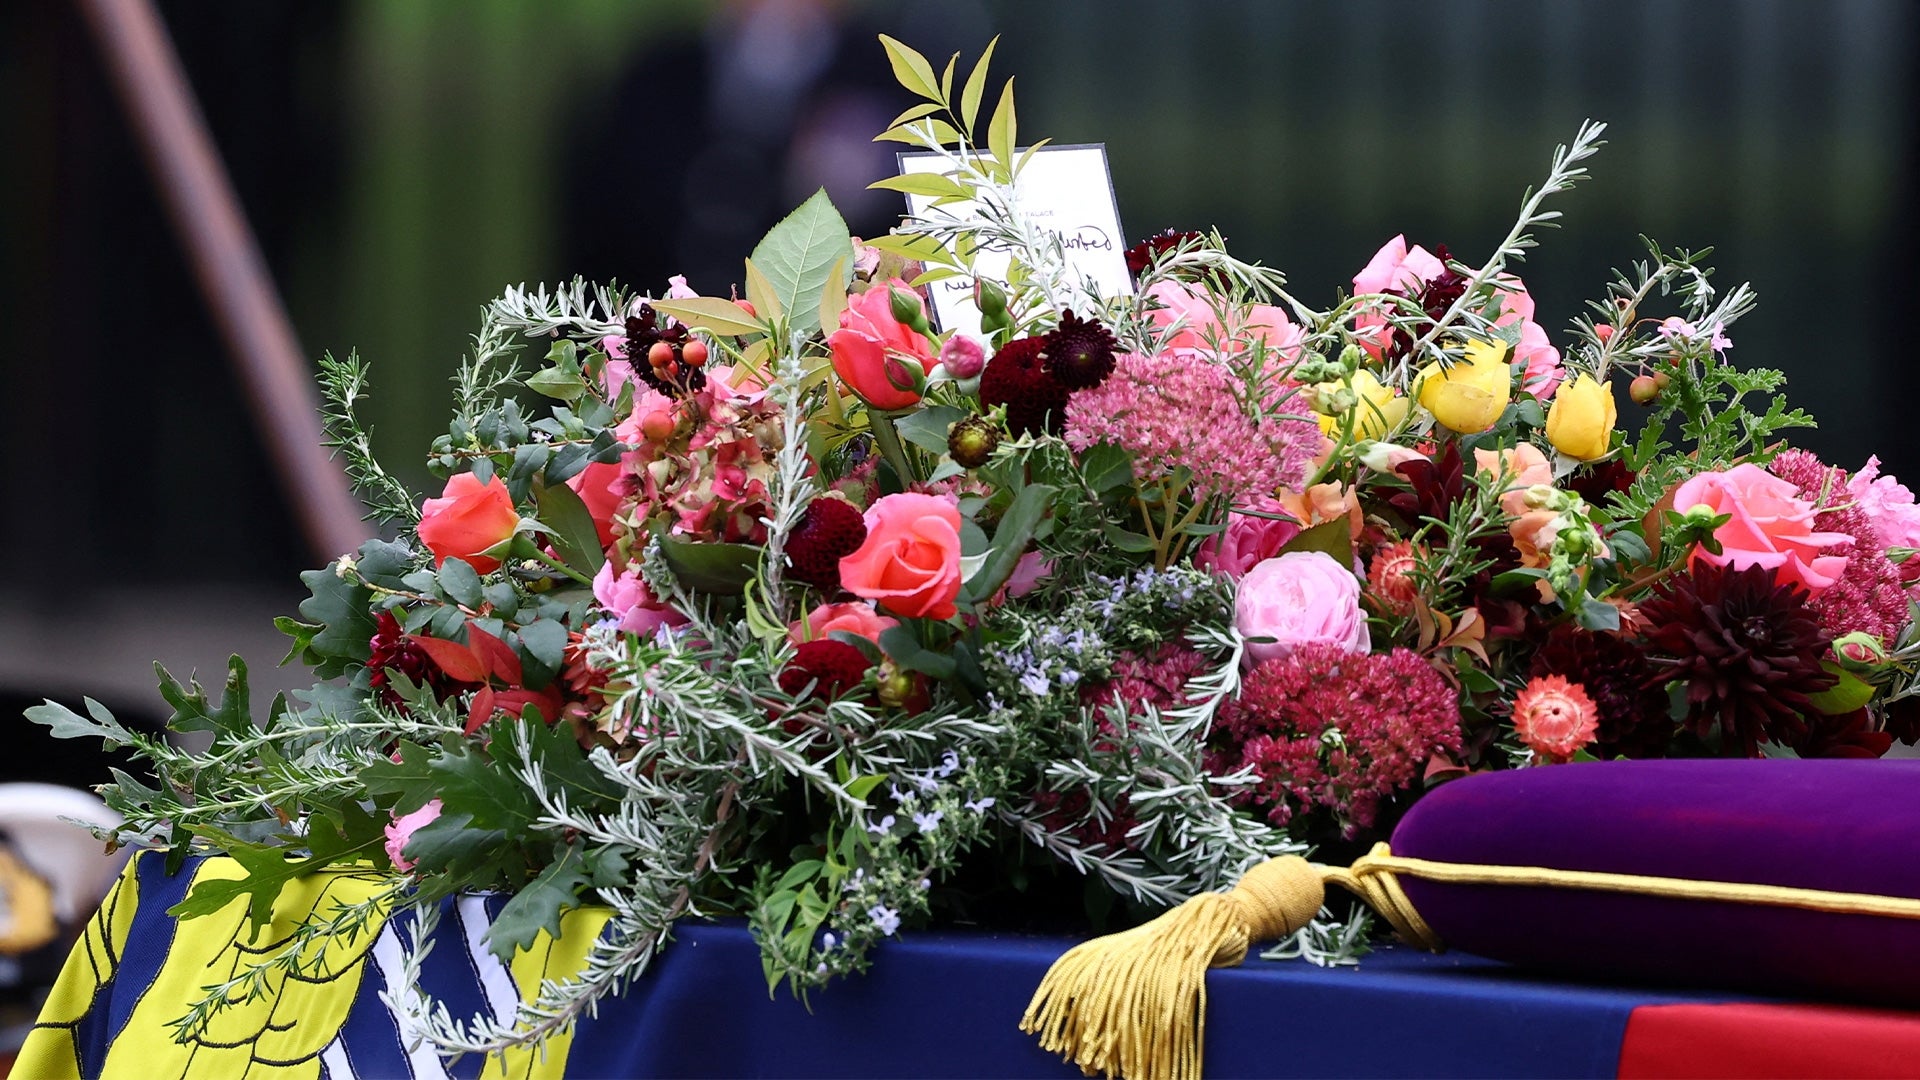 Queen Elizabeth's Funeral Bouquet Featured Flowers From Her Wedding (Source)